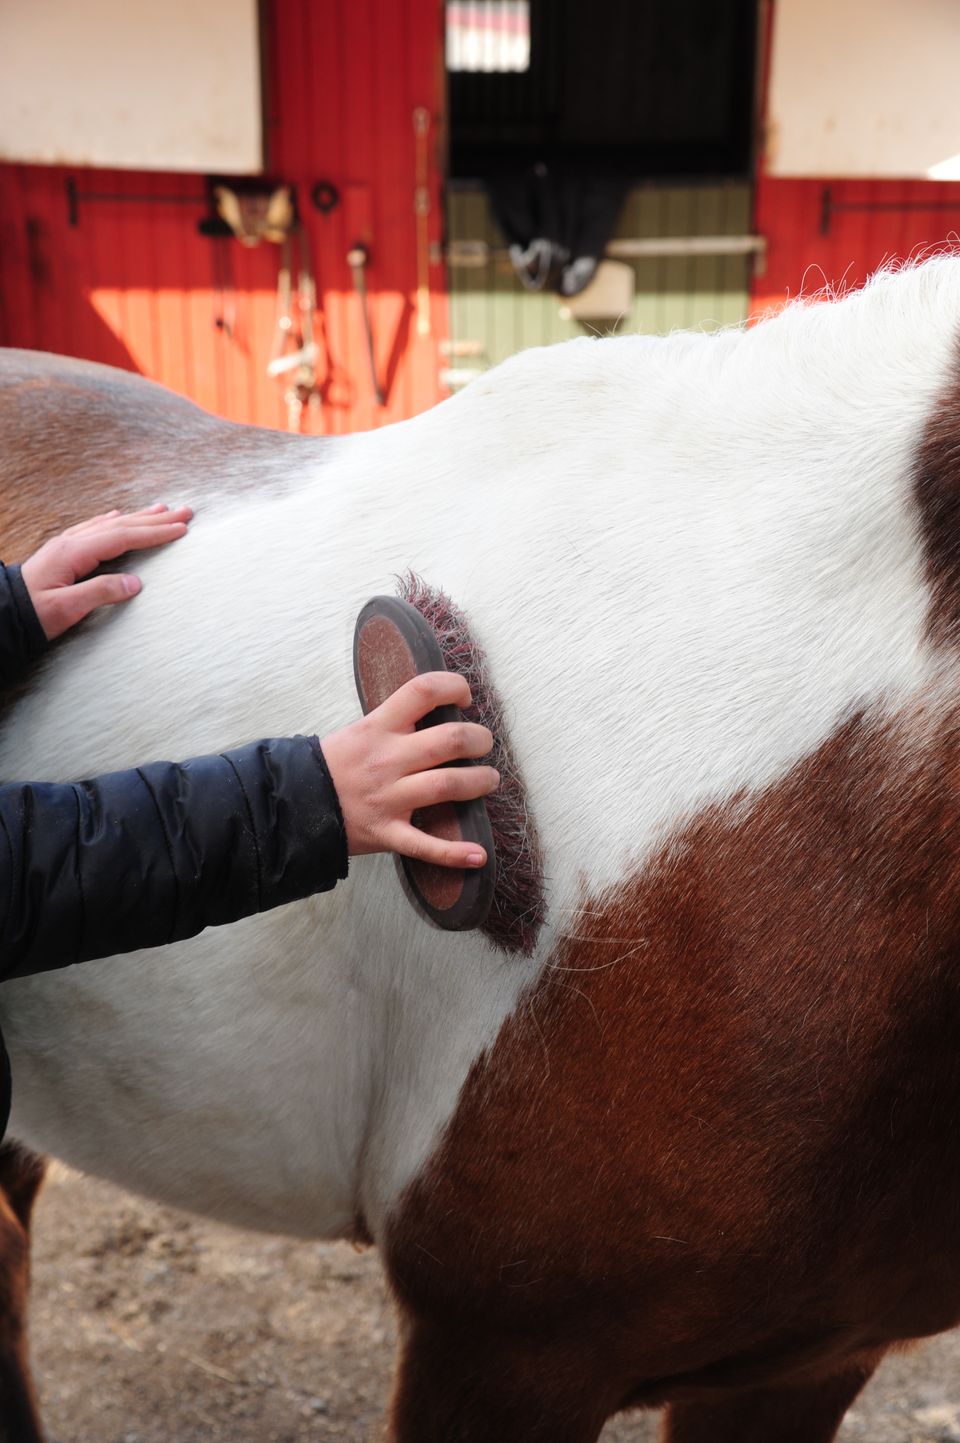 En hånd som børster kroppen til en hest.